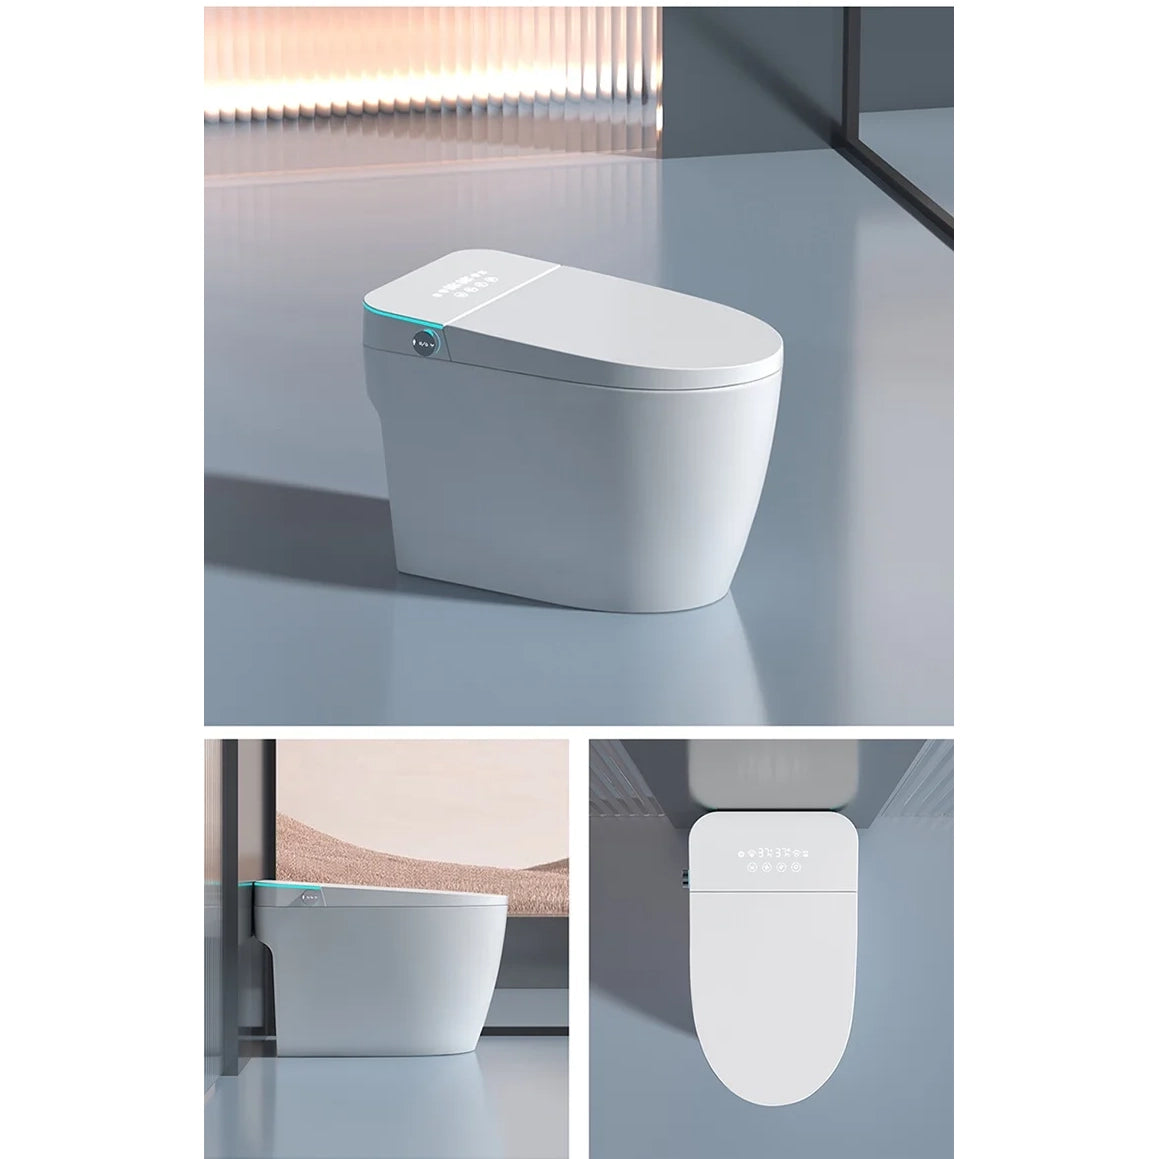 Shinano Maximum Comfort Japanese Style Smart Toilet & Bidet